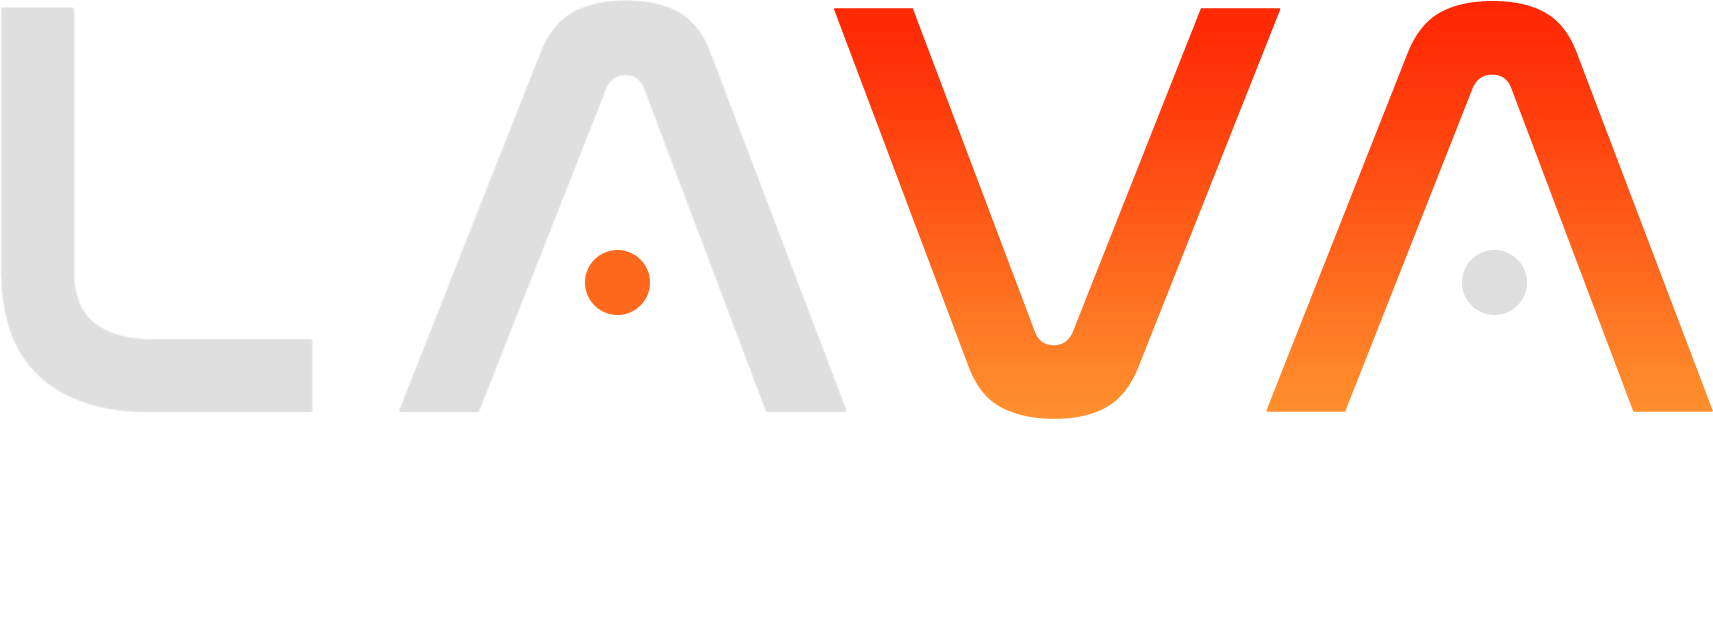 Logo Lava